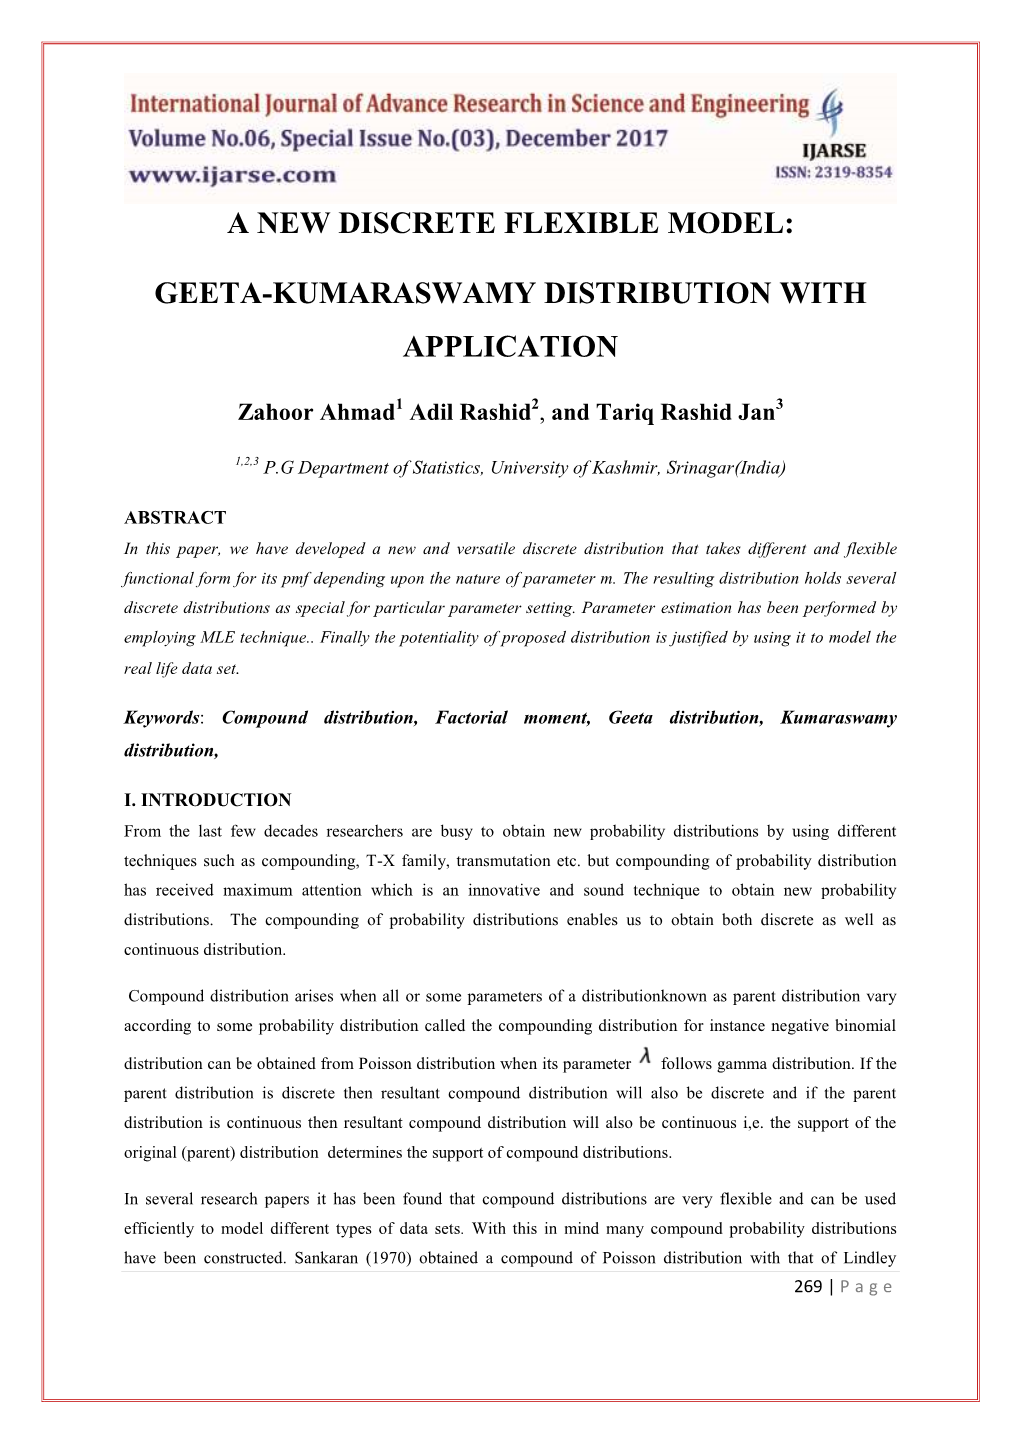 A New Discrete Flexible Model: Geeta-Kumaraswamy Distribution